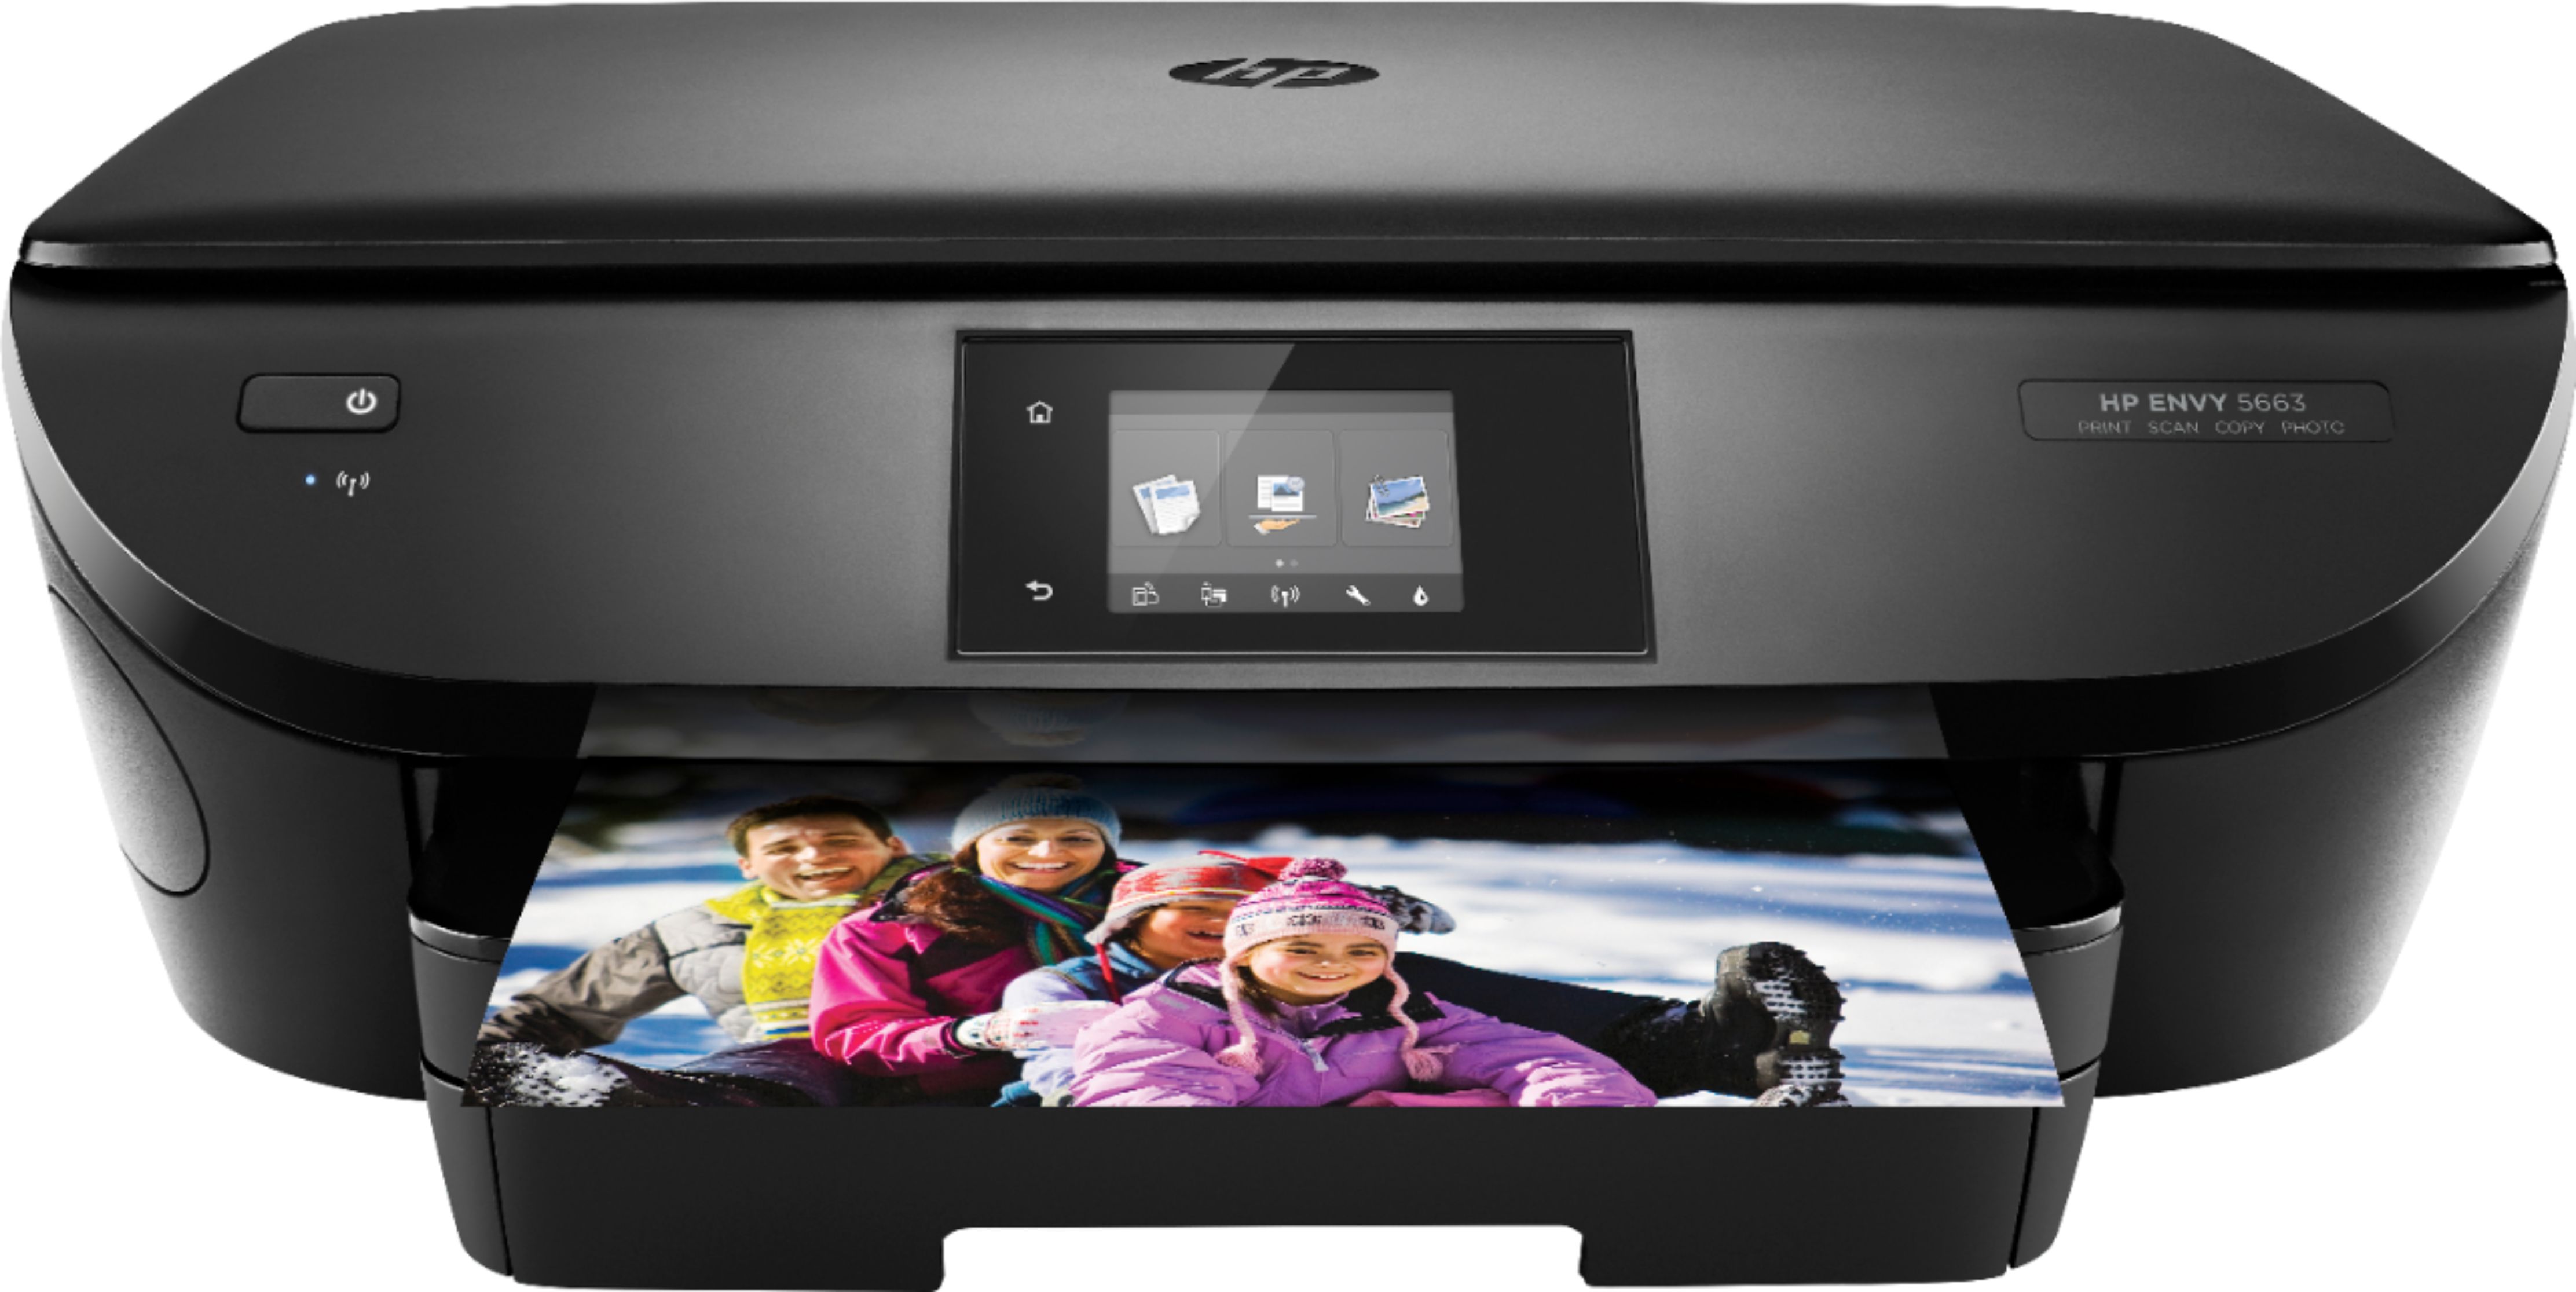 Customer Reviews HP ENVY 5663 Wireless AllInOne Printer F8B12AABA